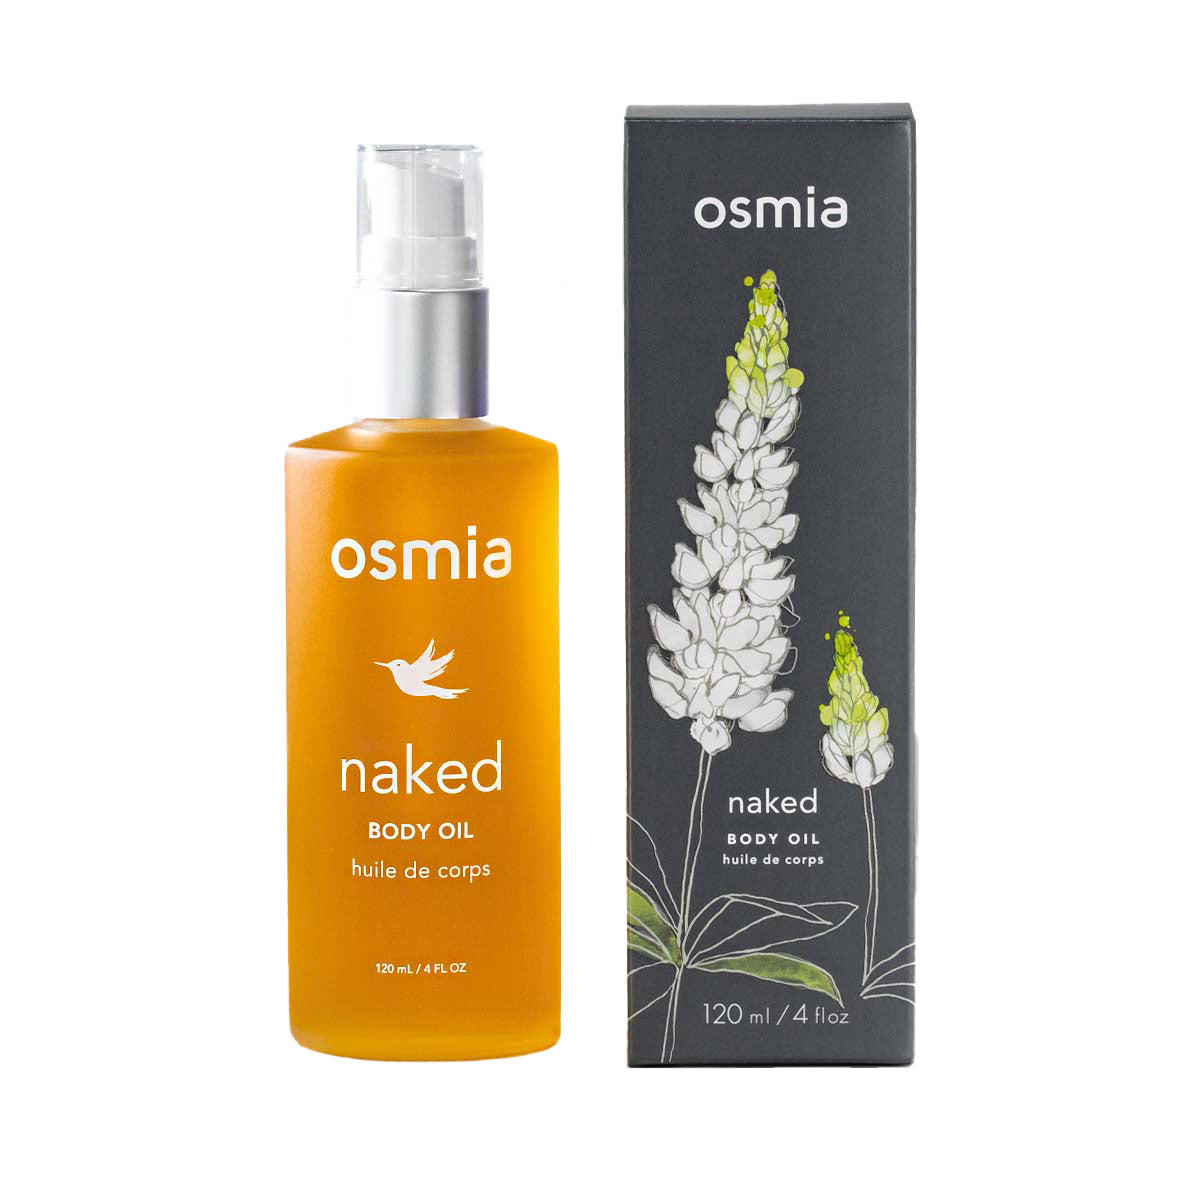 Naked Body Oil by Osmia